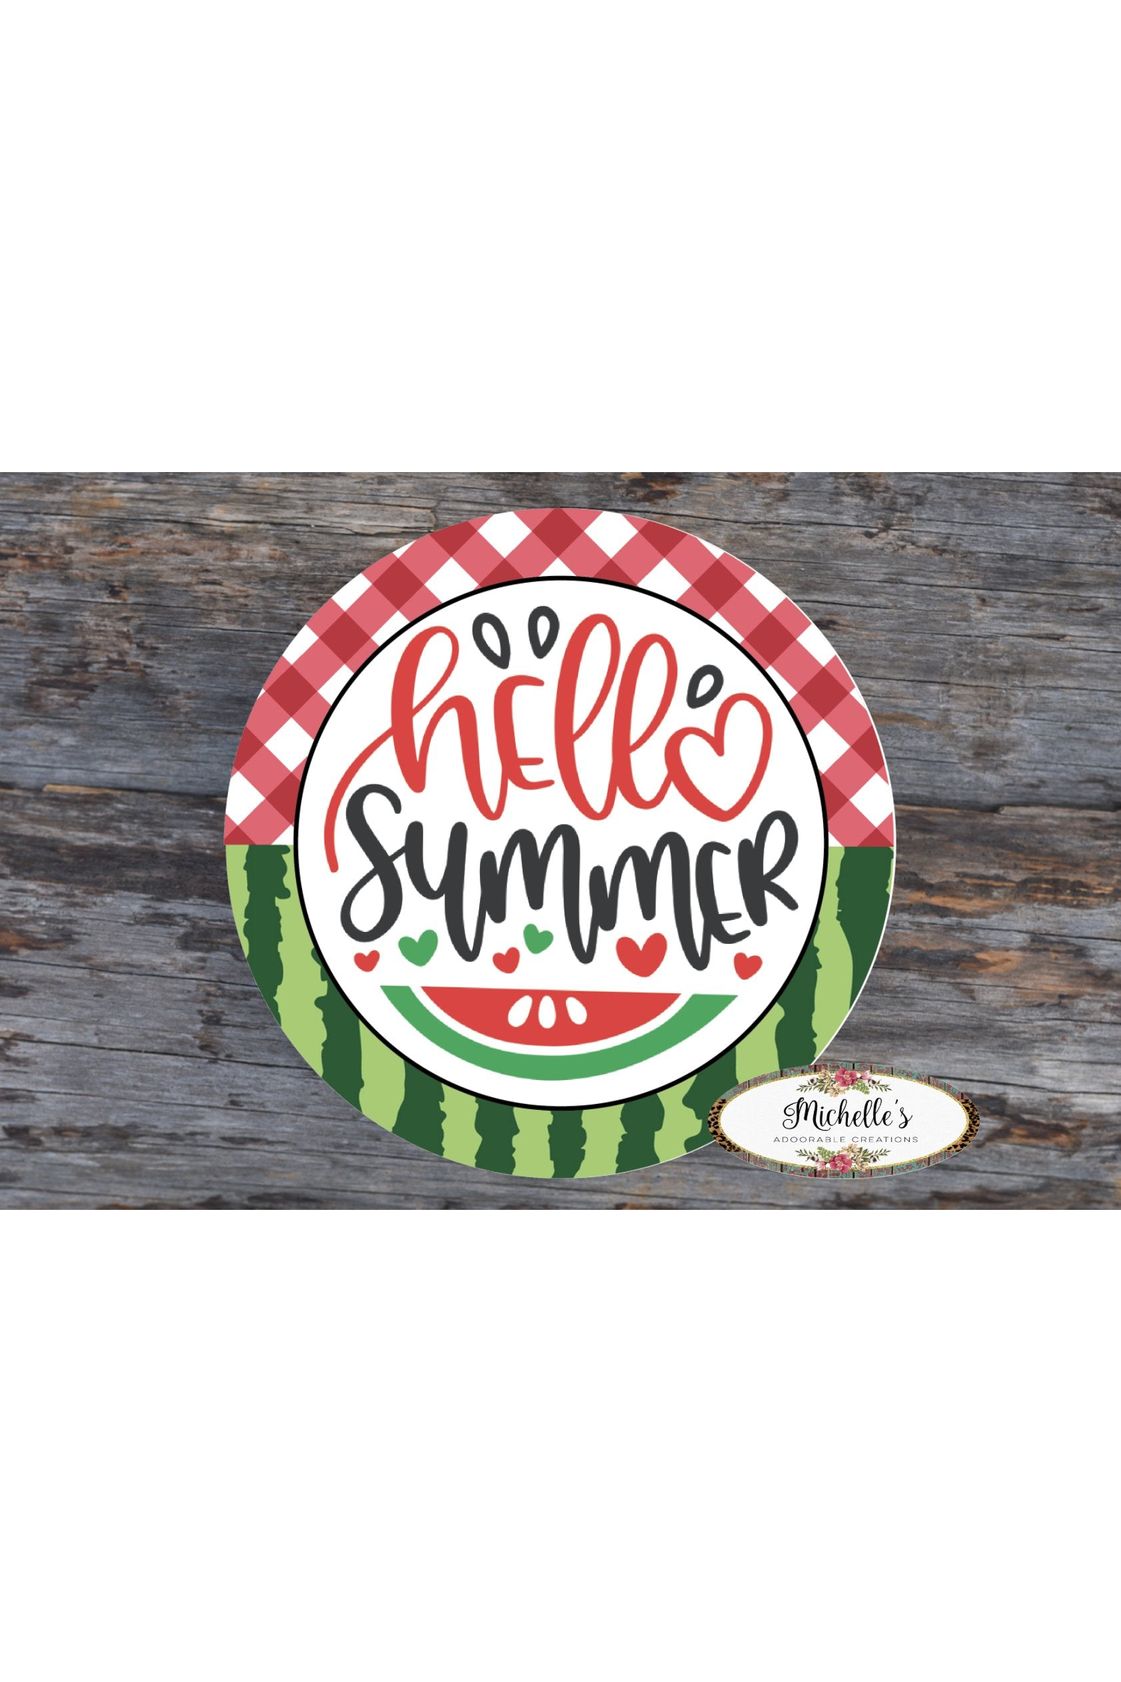 Shop For Hello Summer Round Watermelon Sign - Wreath Enhancement